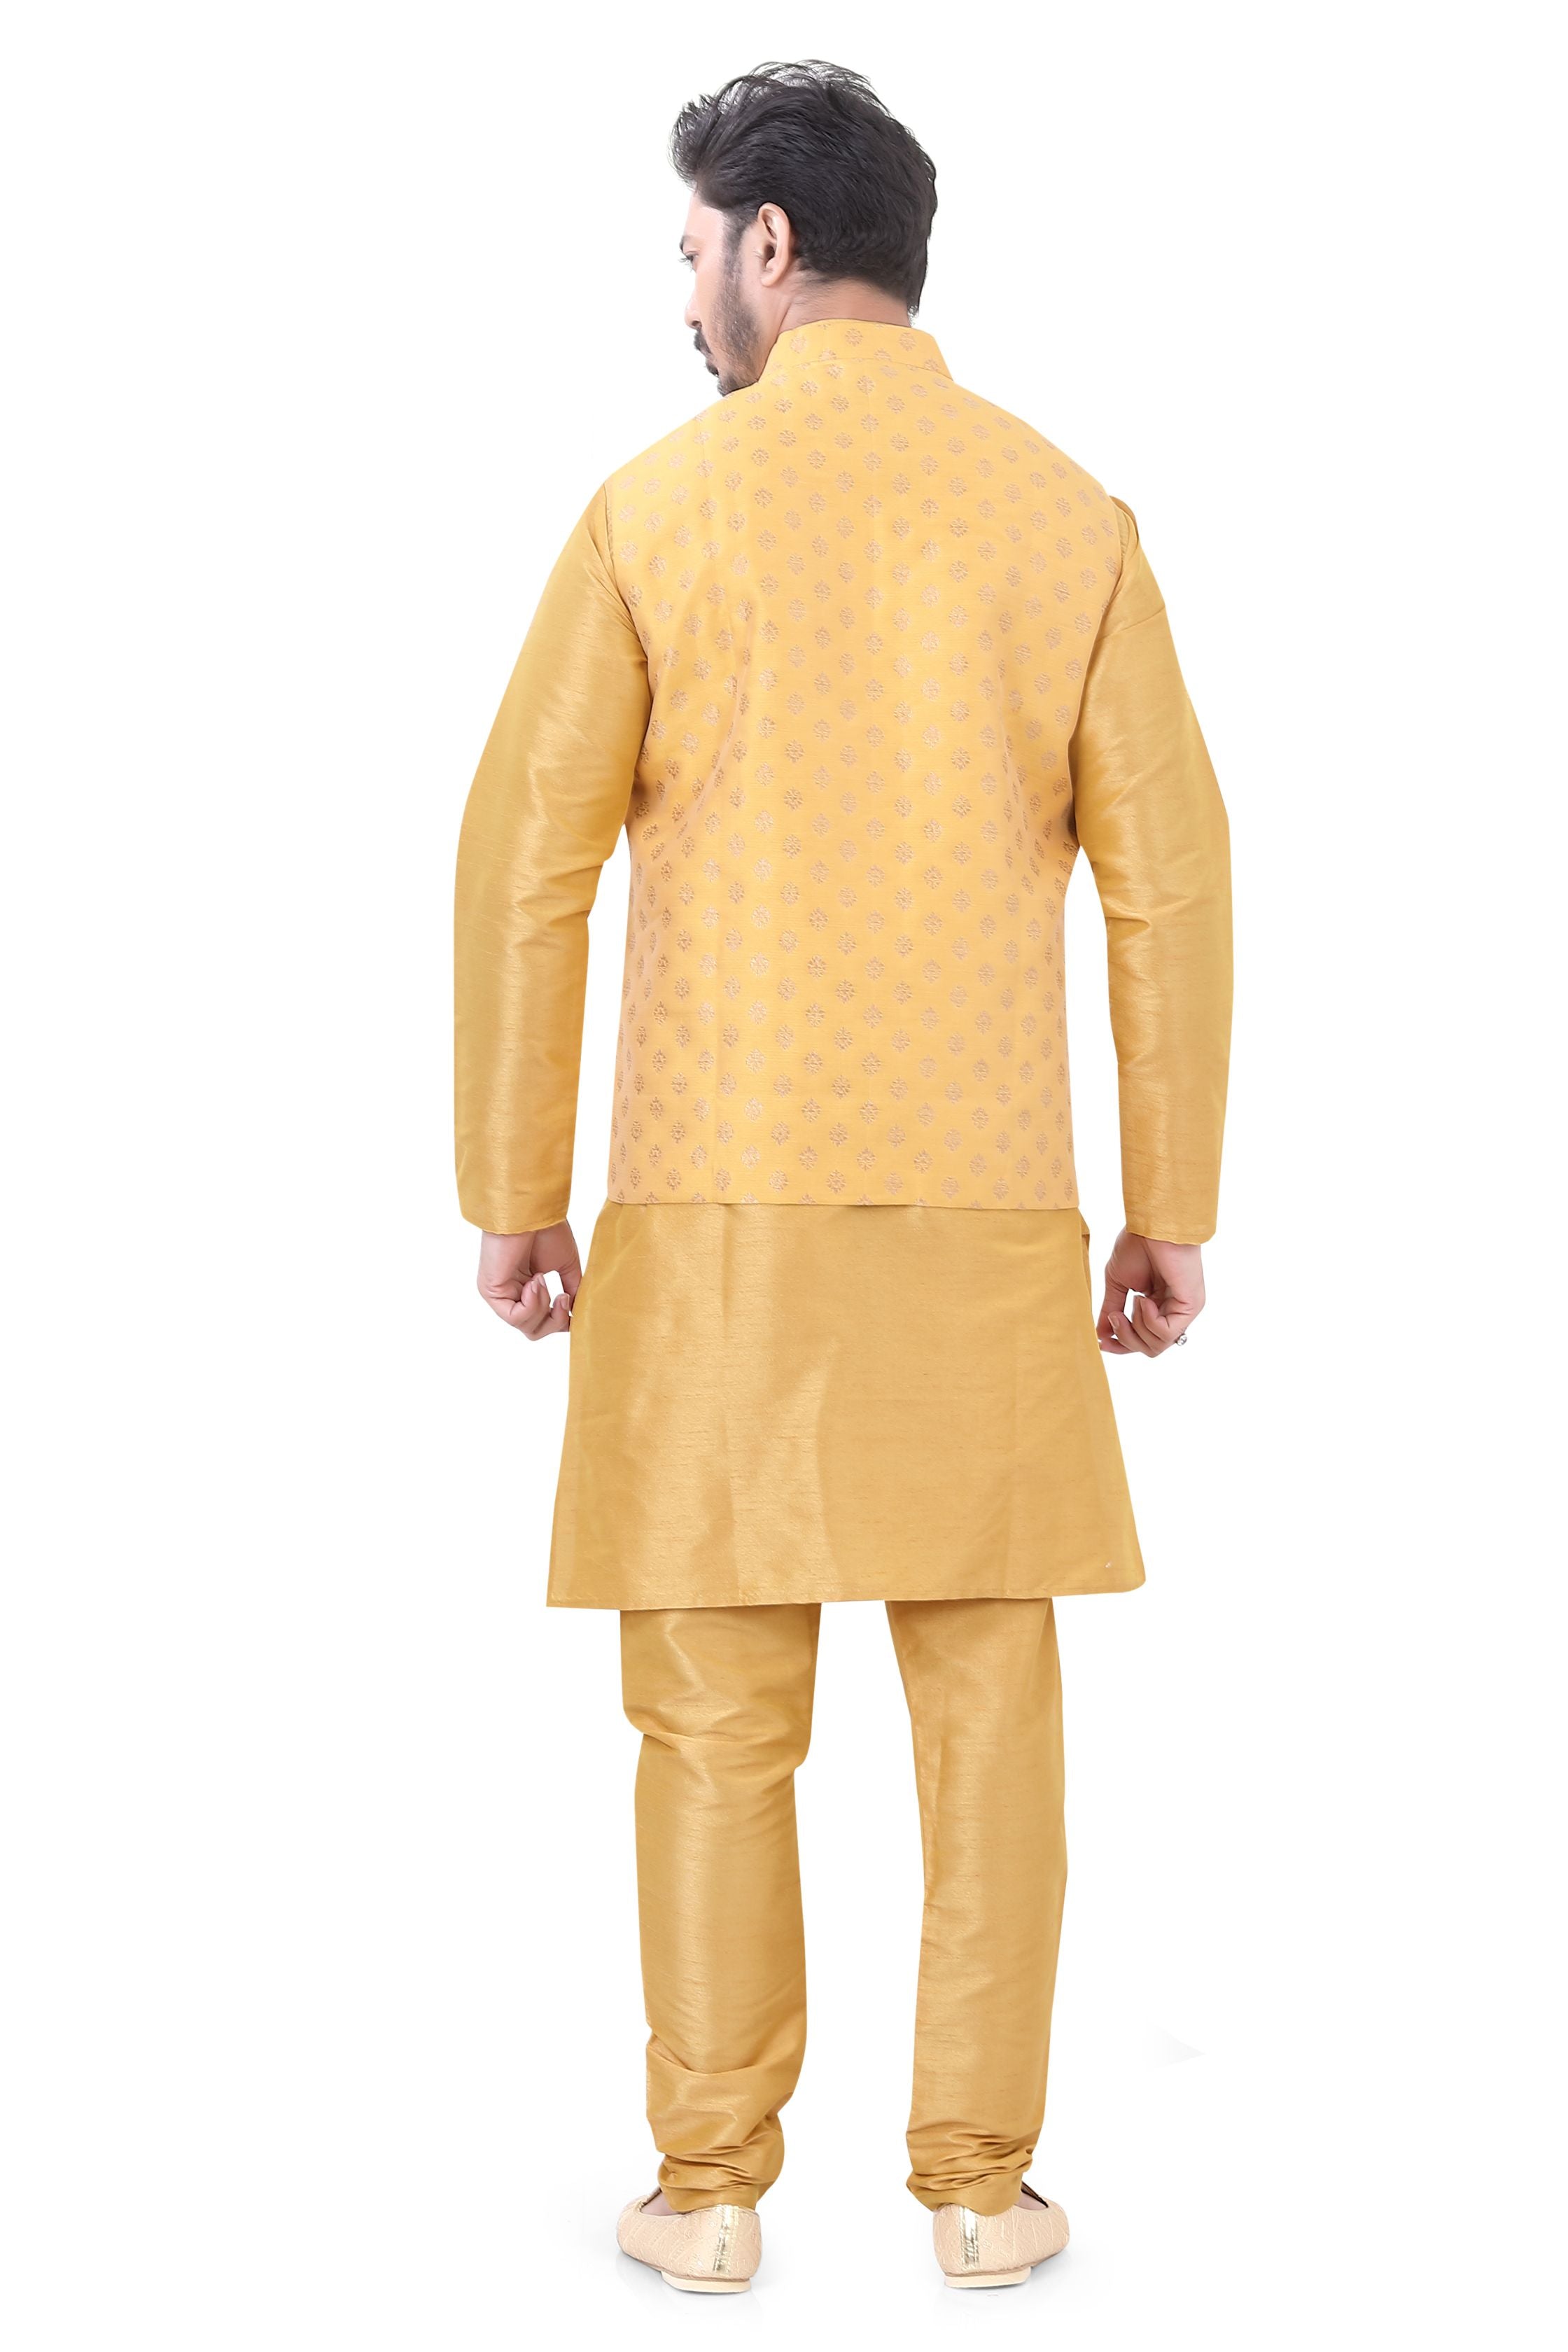 Plus size Modi Jacket set in Mustard color